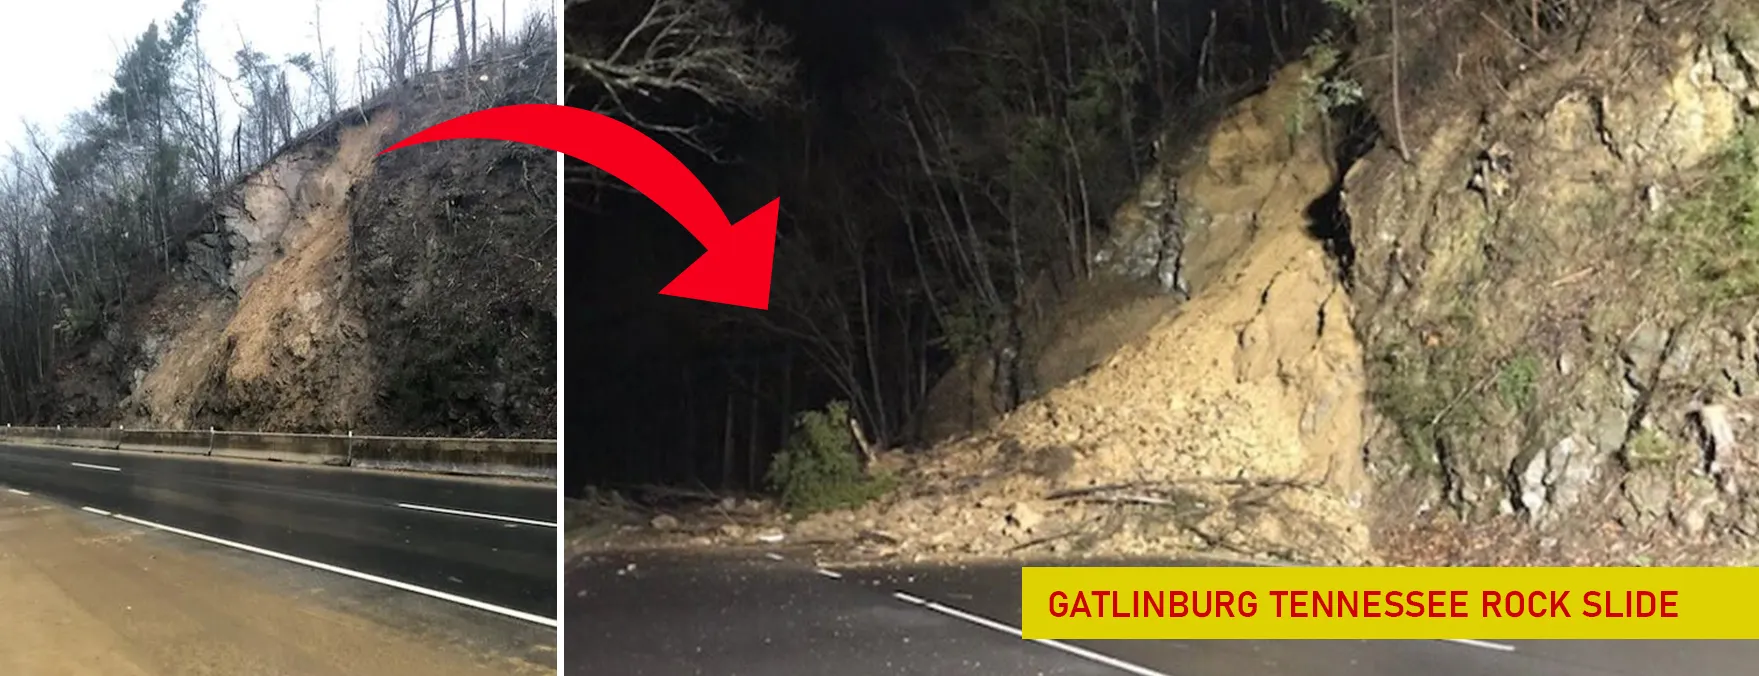 Gatlinburg Tennessee Rock Slide